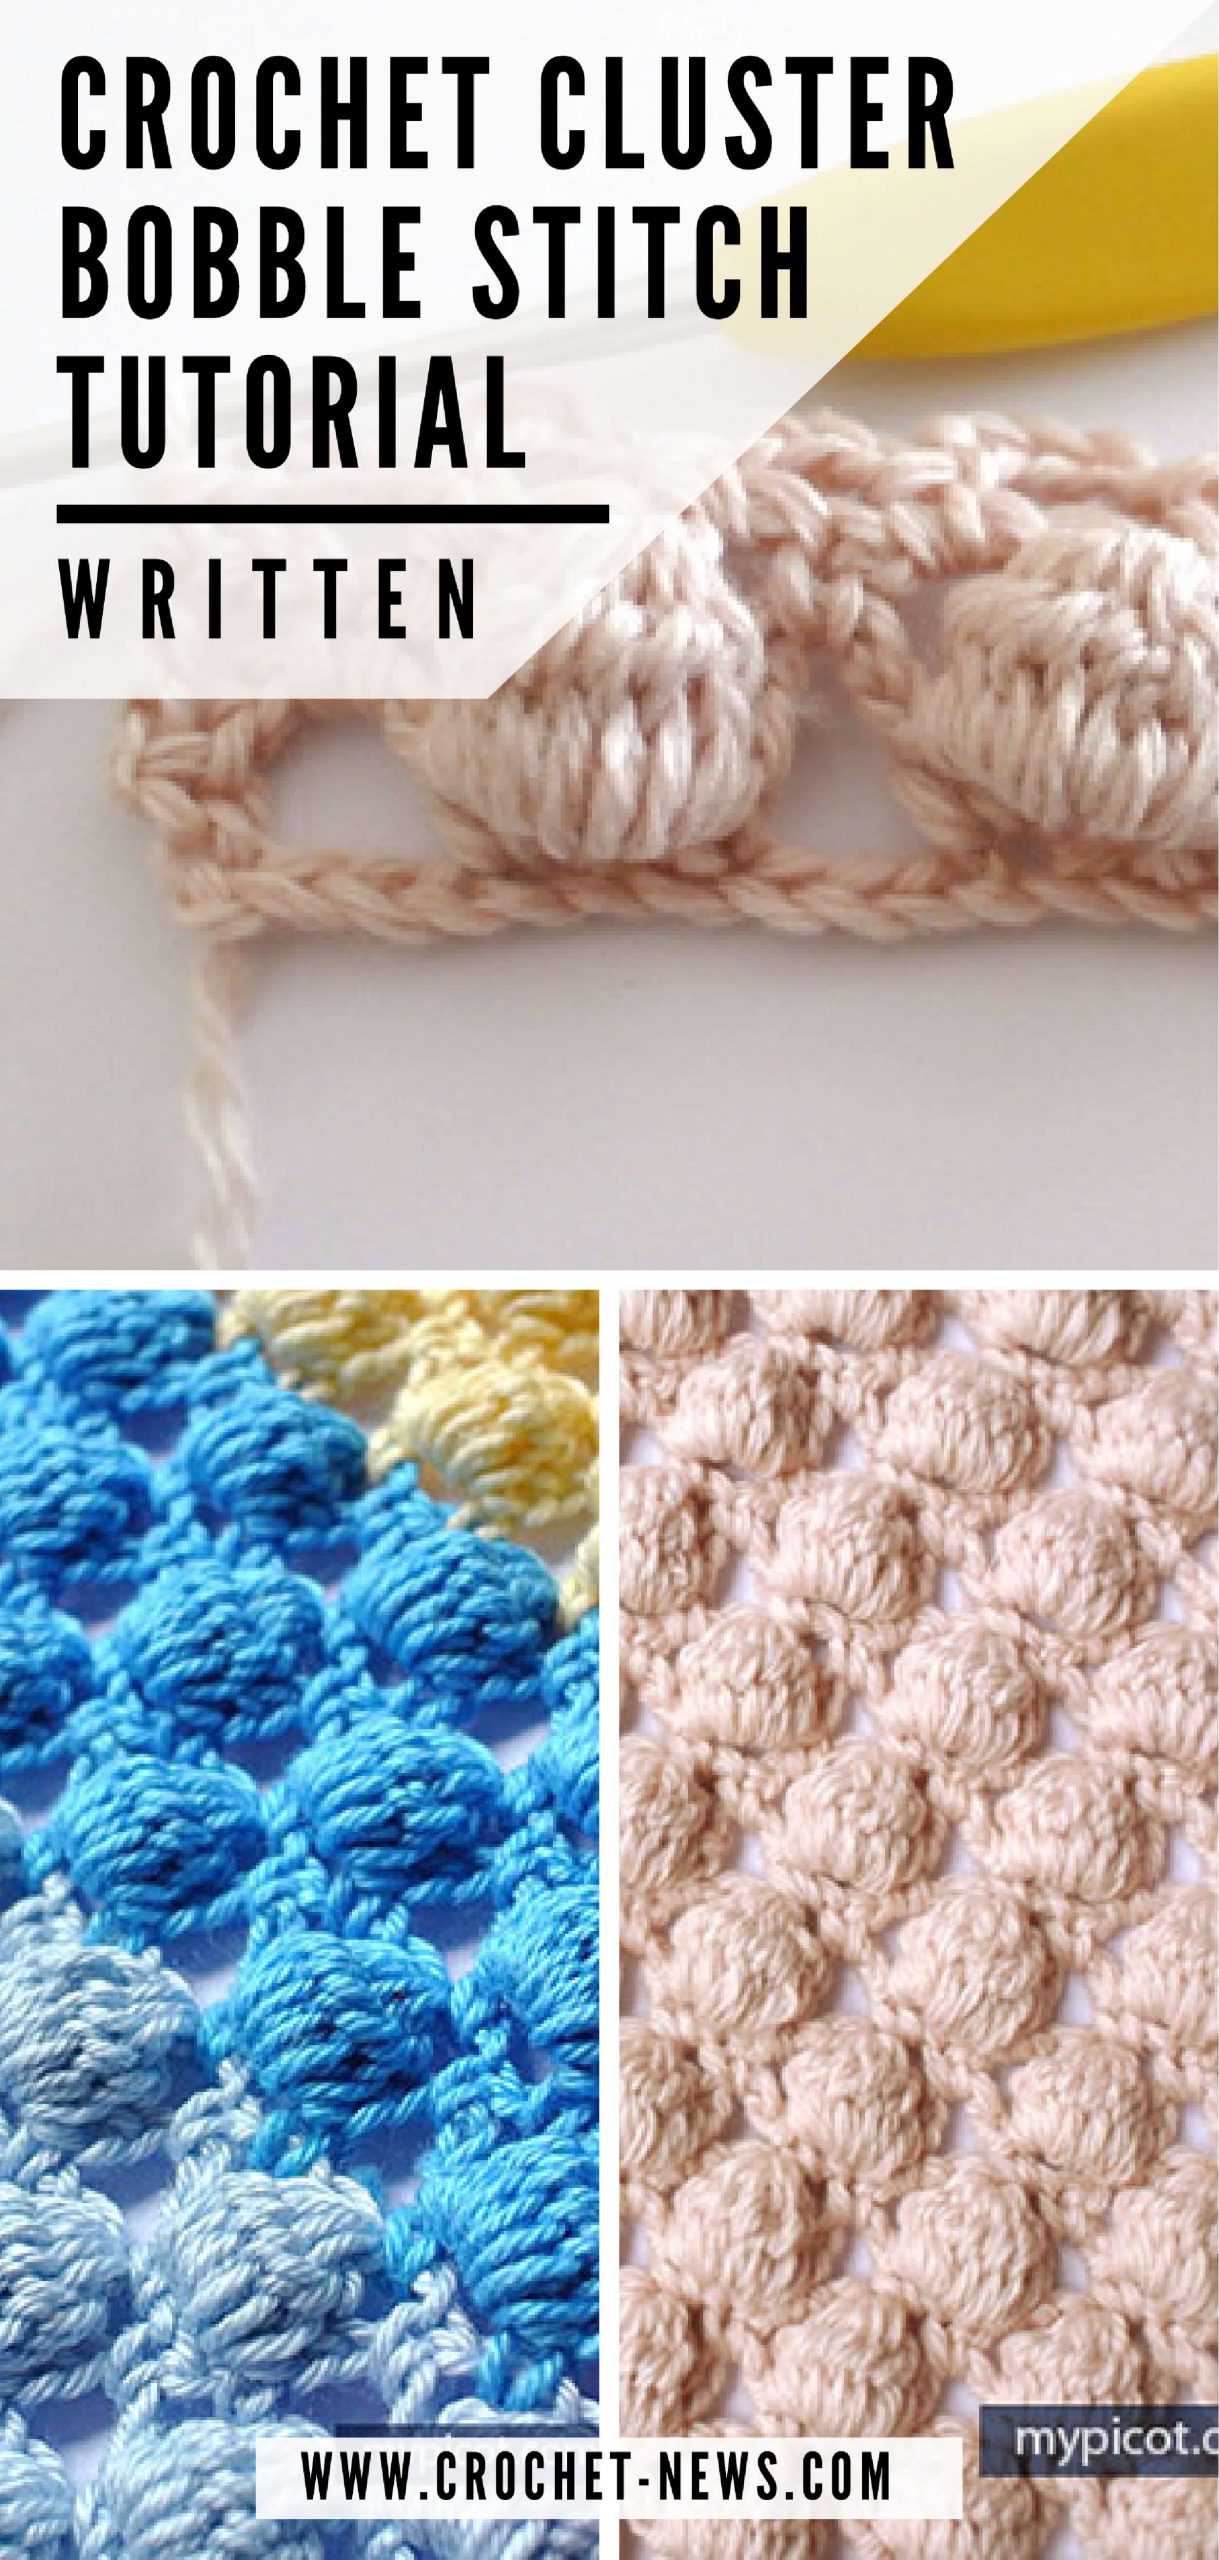 Crochet Cluster Bobble Stitch Tutorial